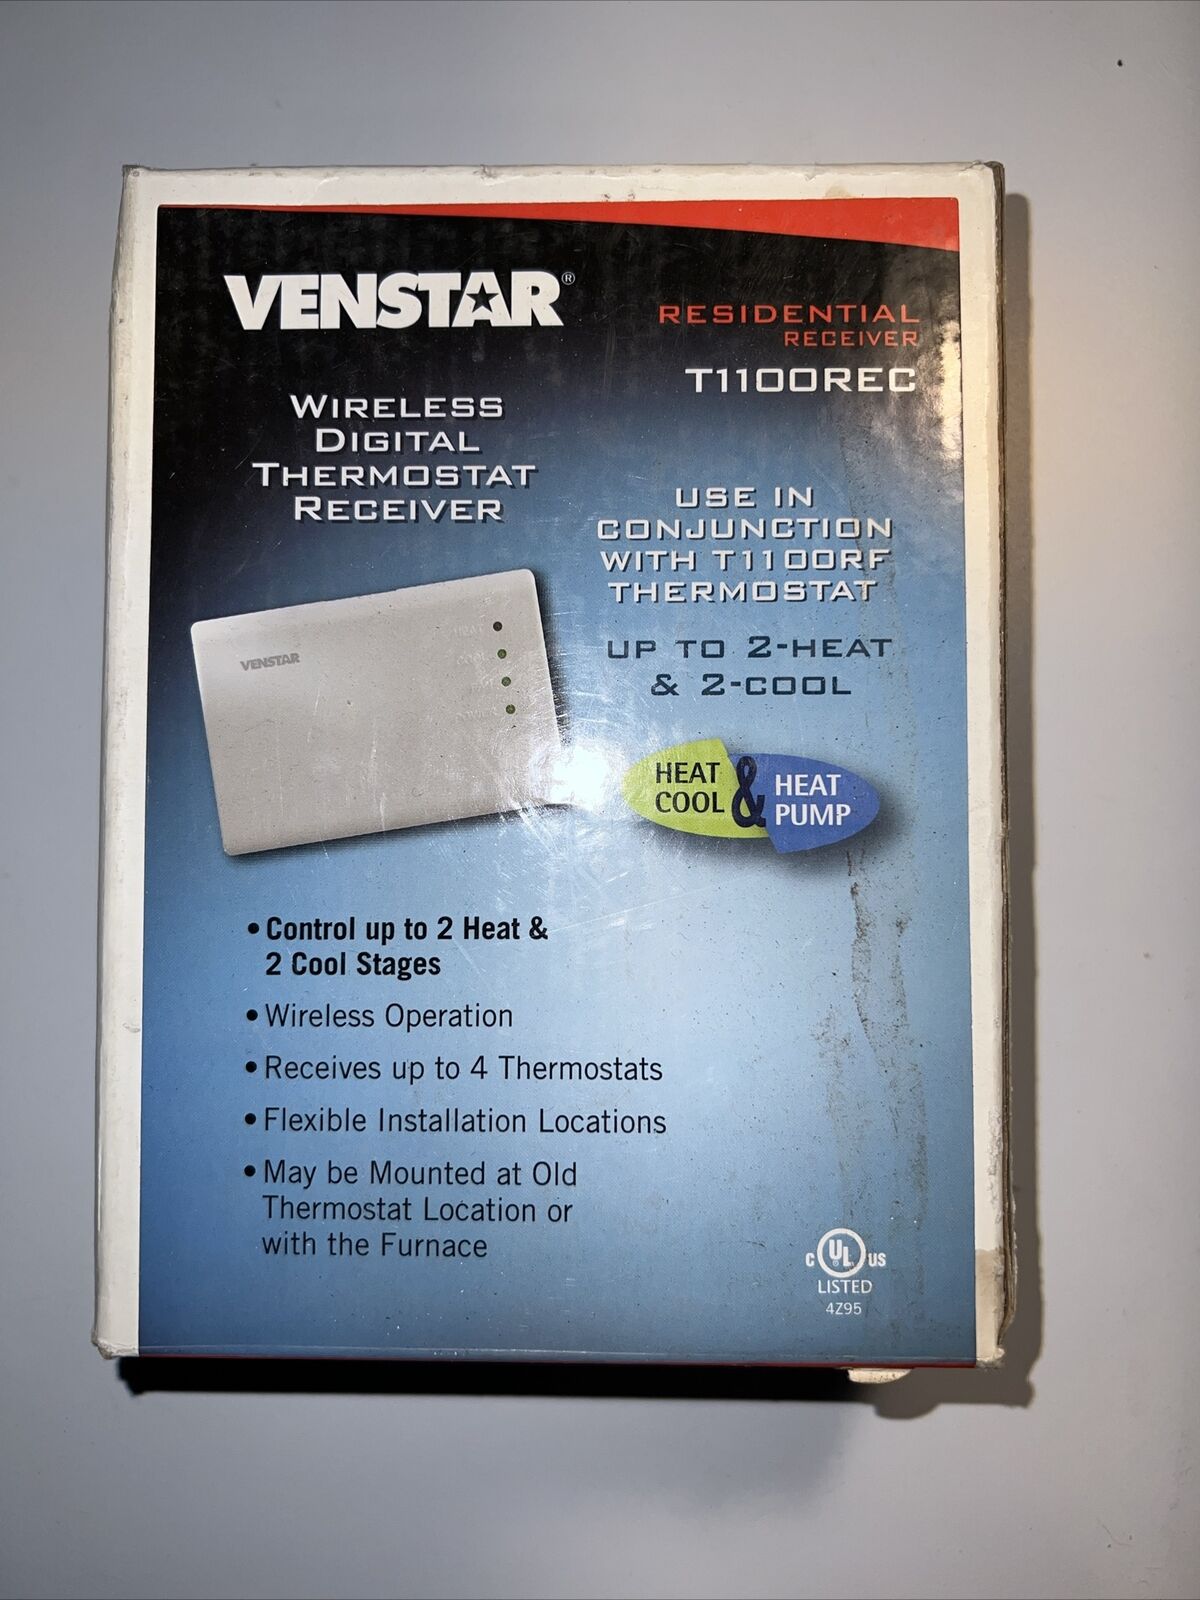 Venstar Wireless Digital Thermostat Receiver T1100REC